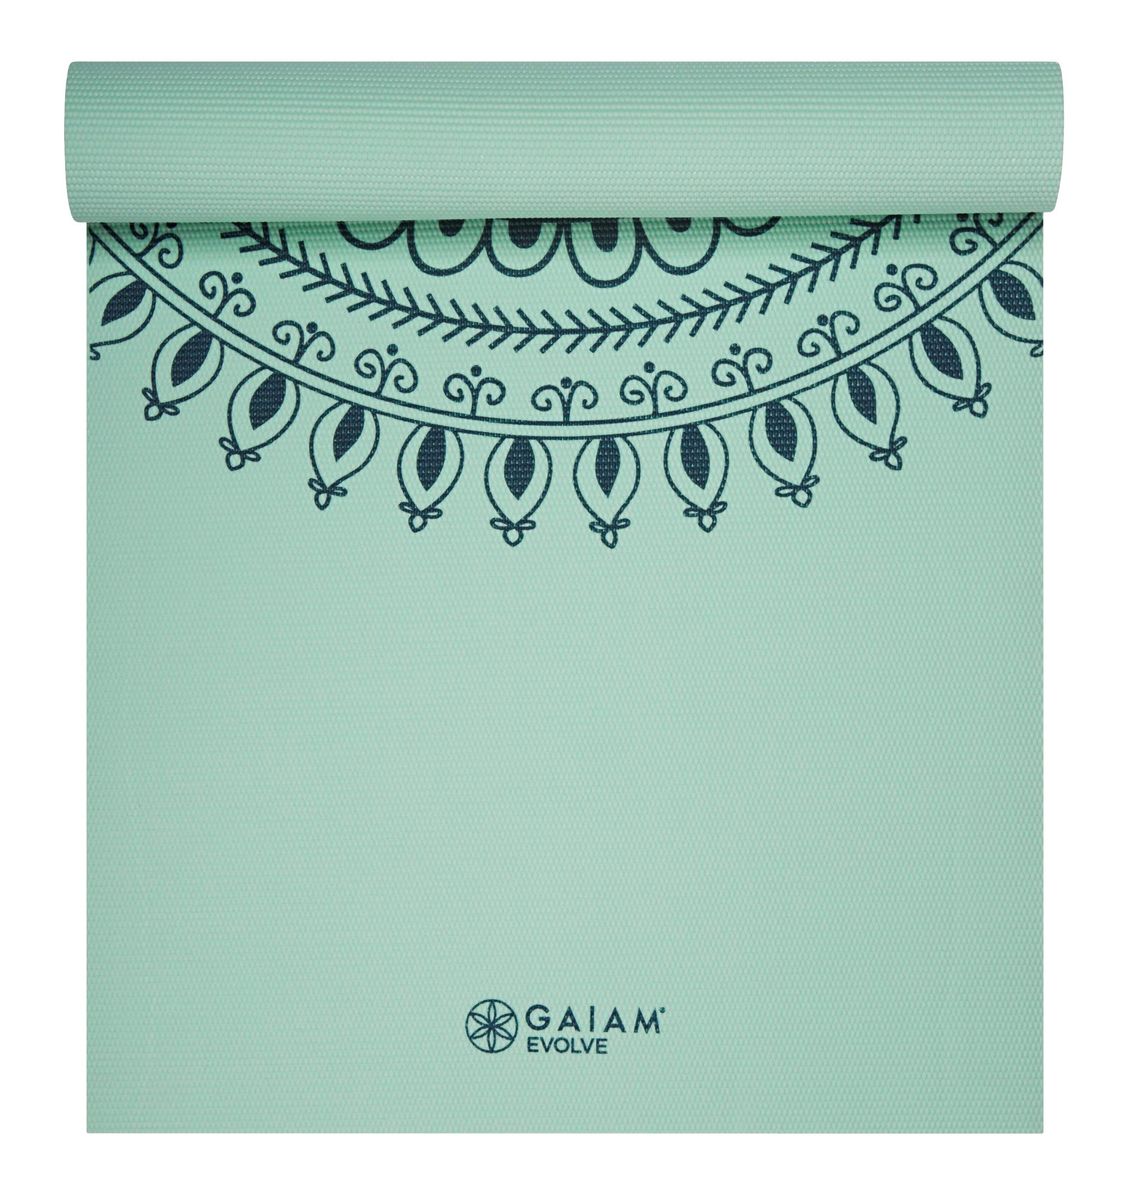 [RDY] [送料無料] Evolve by Gaiam 5mmプリントヨガマット ミントマラケシュ PVC [楽天海外通販] | Evolve by Gaiam 5mm Printed Yoga Mat, Mint Marrakesh, PVC